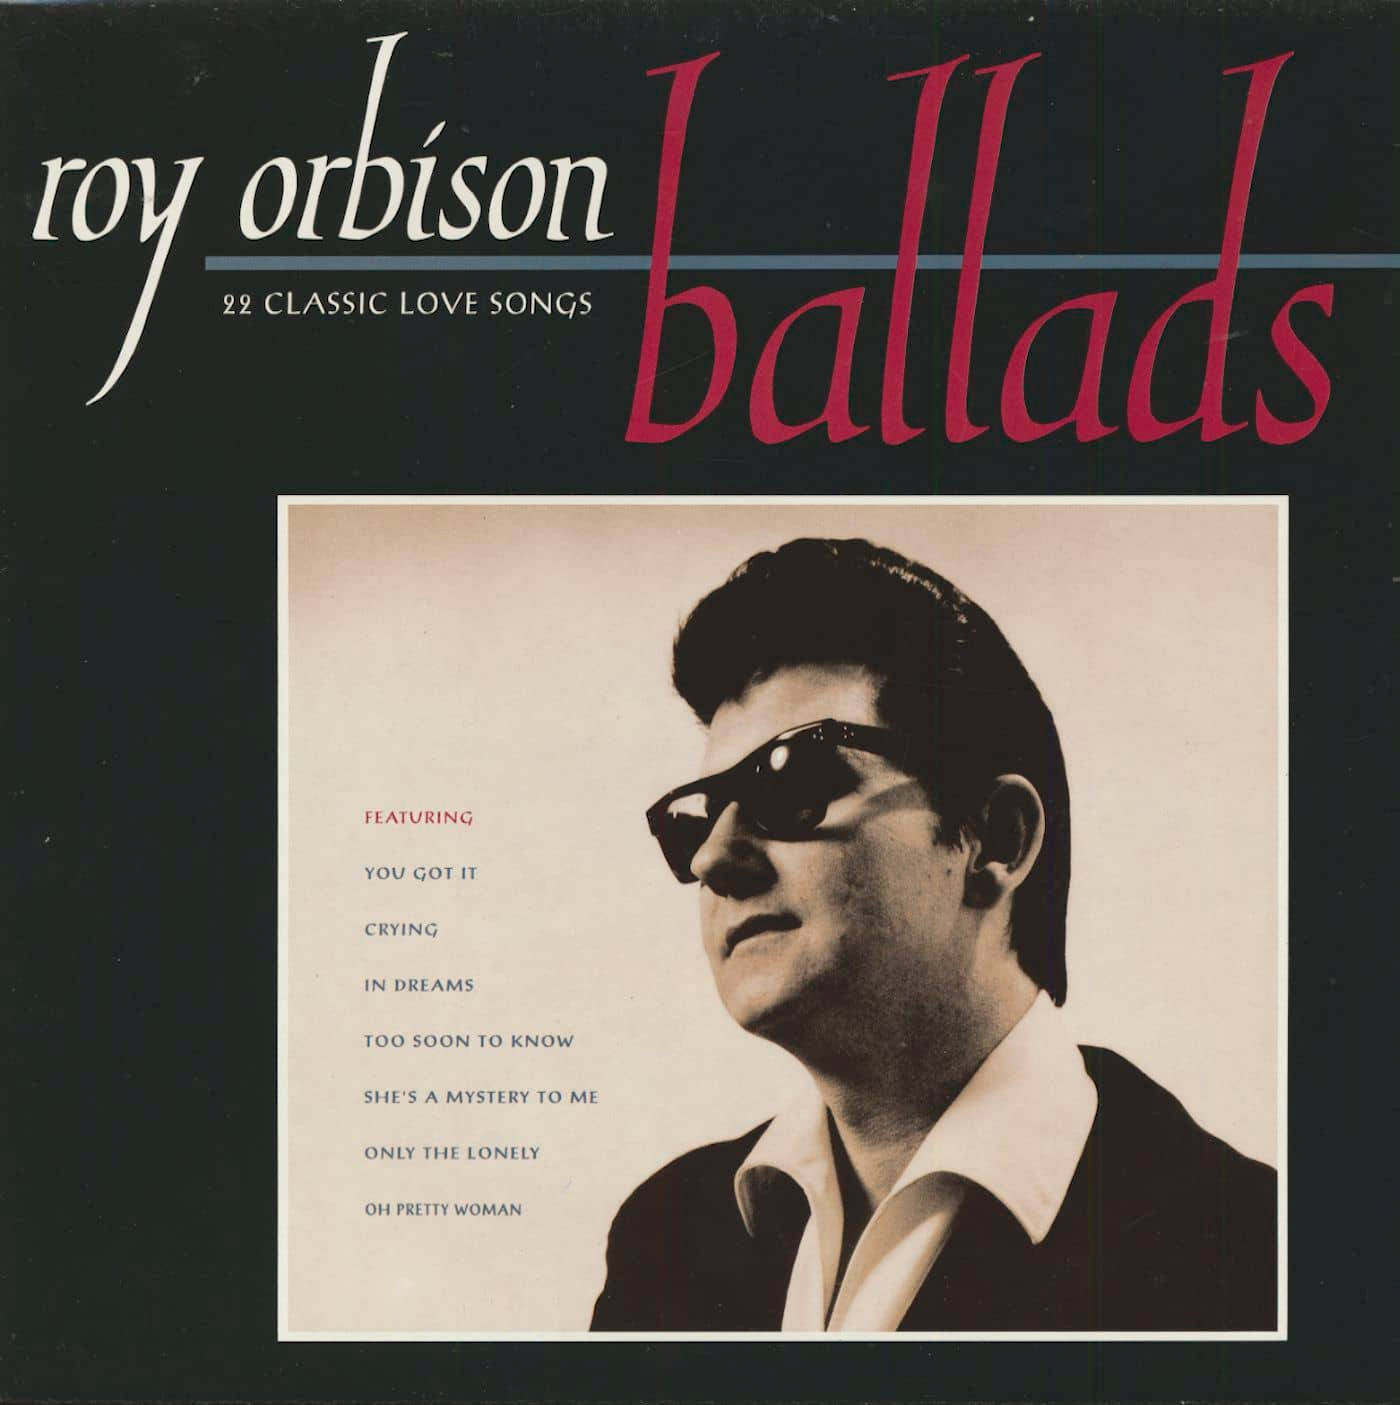 Roy Orbison Ballads Album Cover Wallpaper